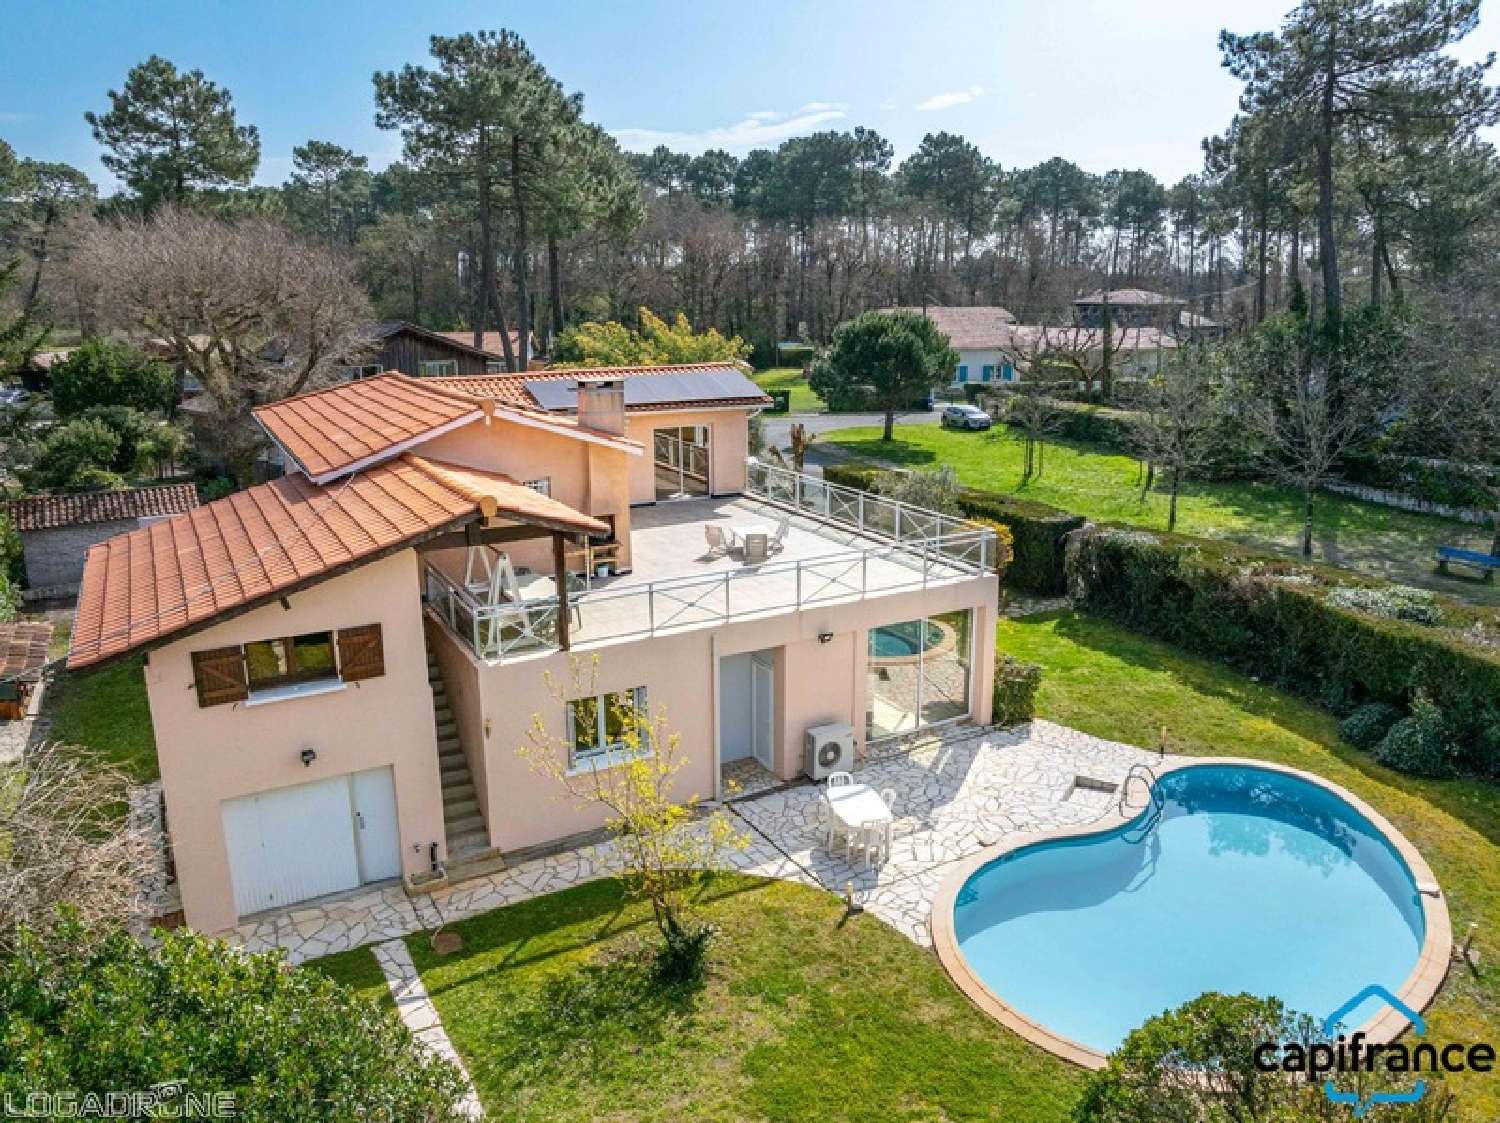  à vendre maison Andernos-les-Bains Gironde 5